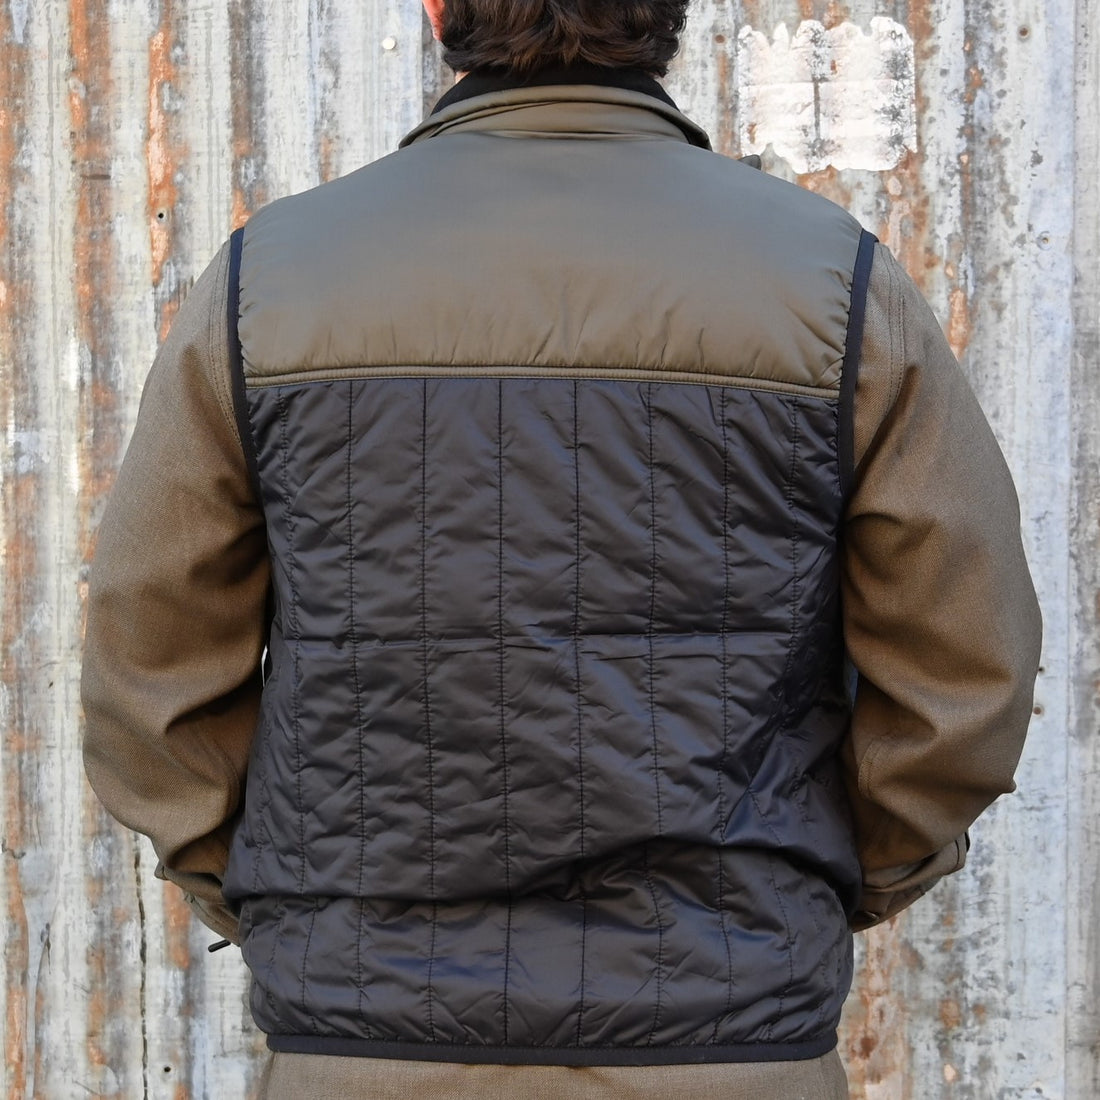 Filson Mens Ultralight Vest view of back in black/olive